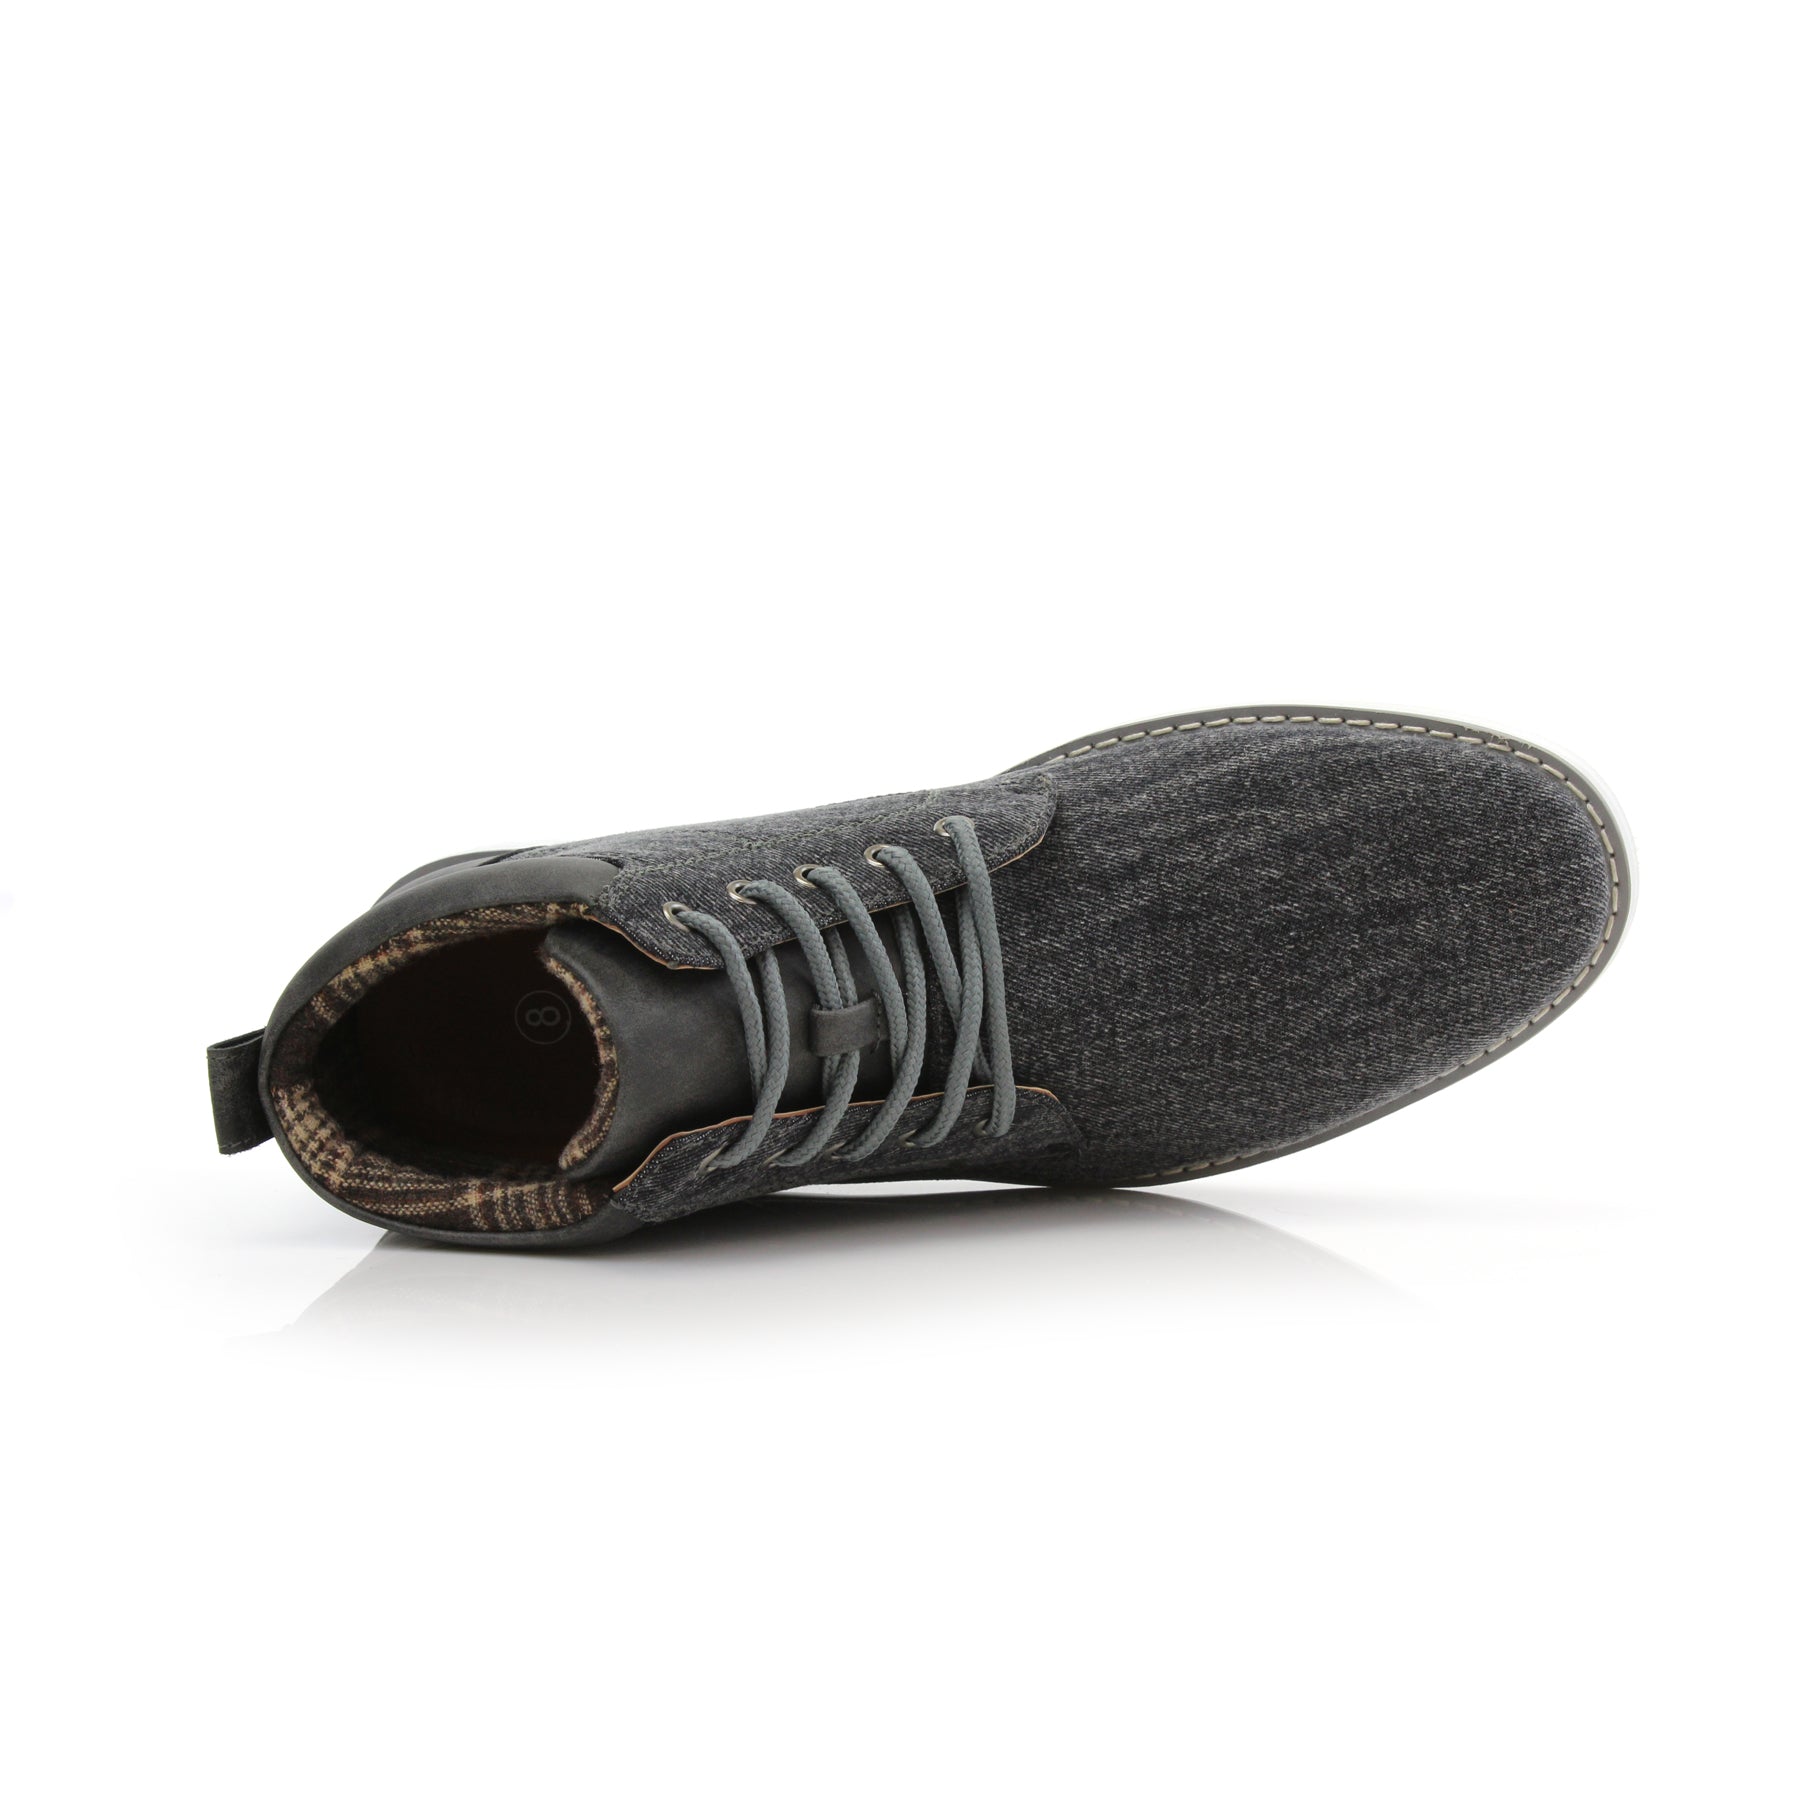 Denim Chukka Sneakers | Dustin by Polar Fox | Conal Footwear | Top-Down Angle View